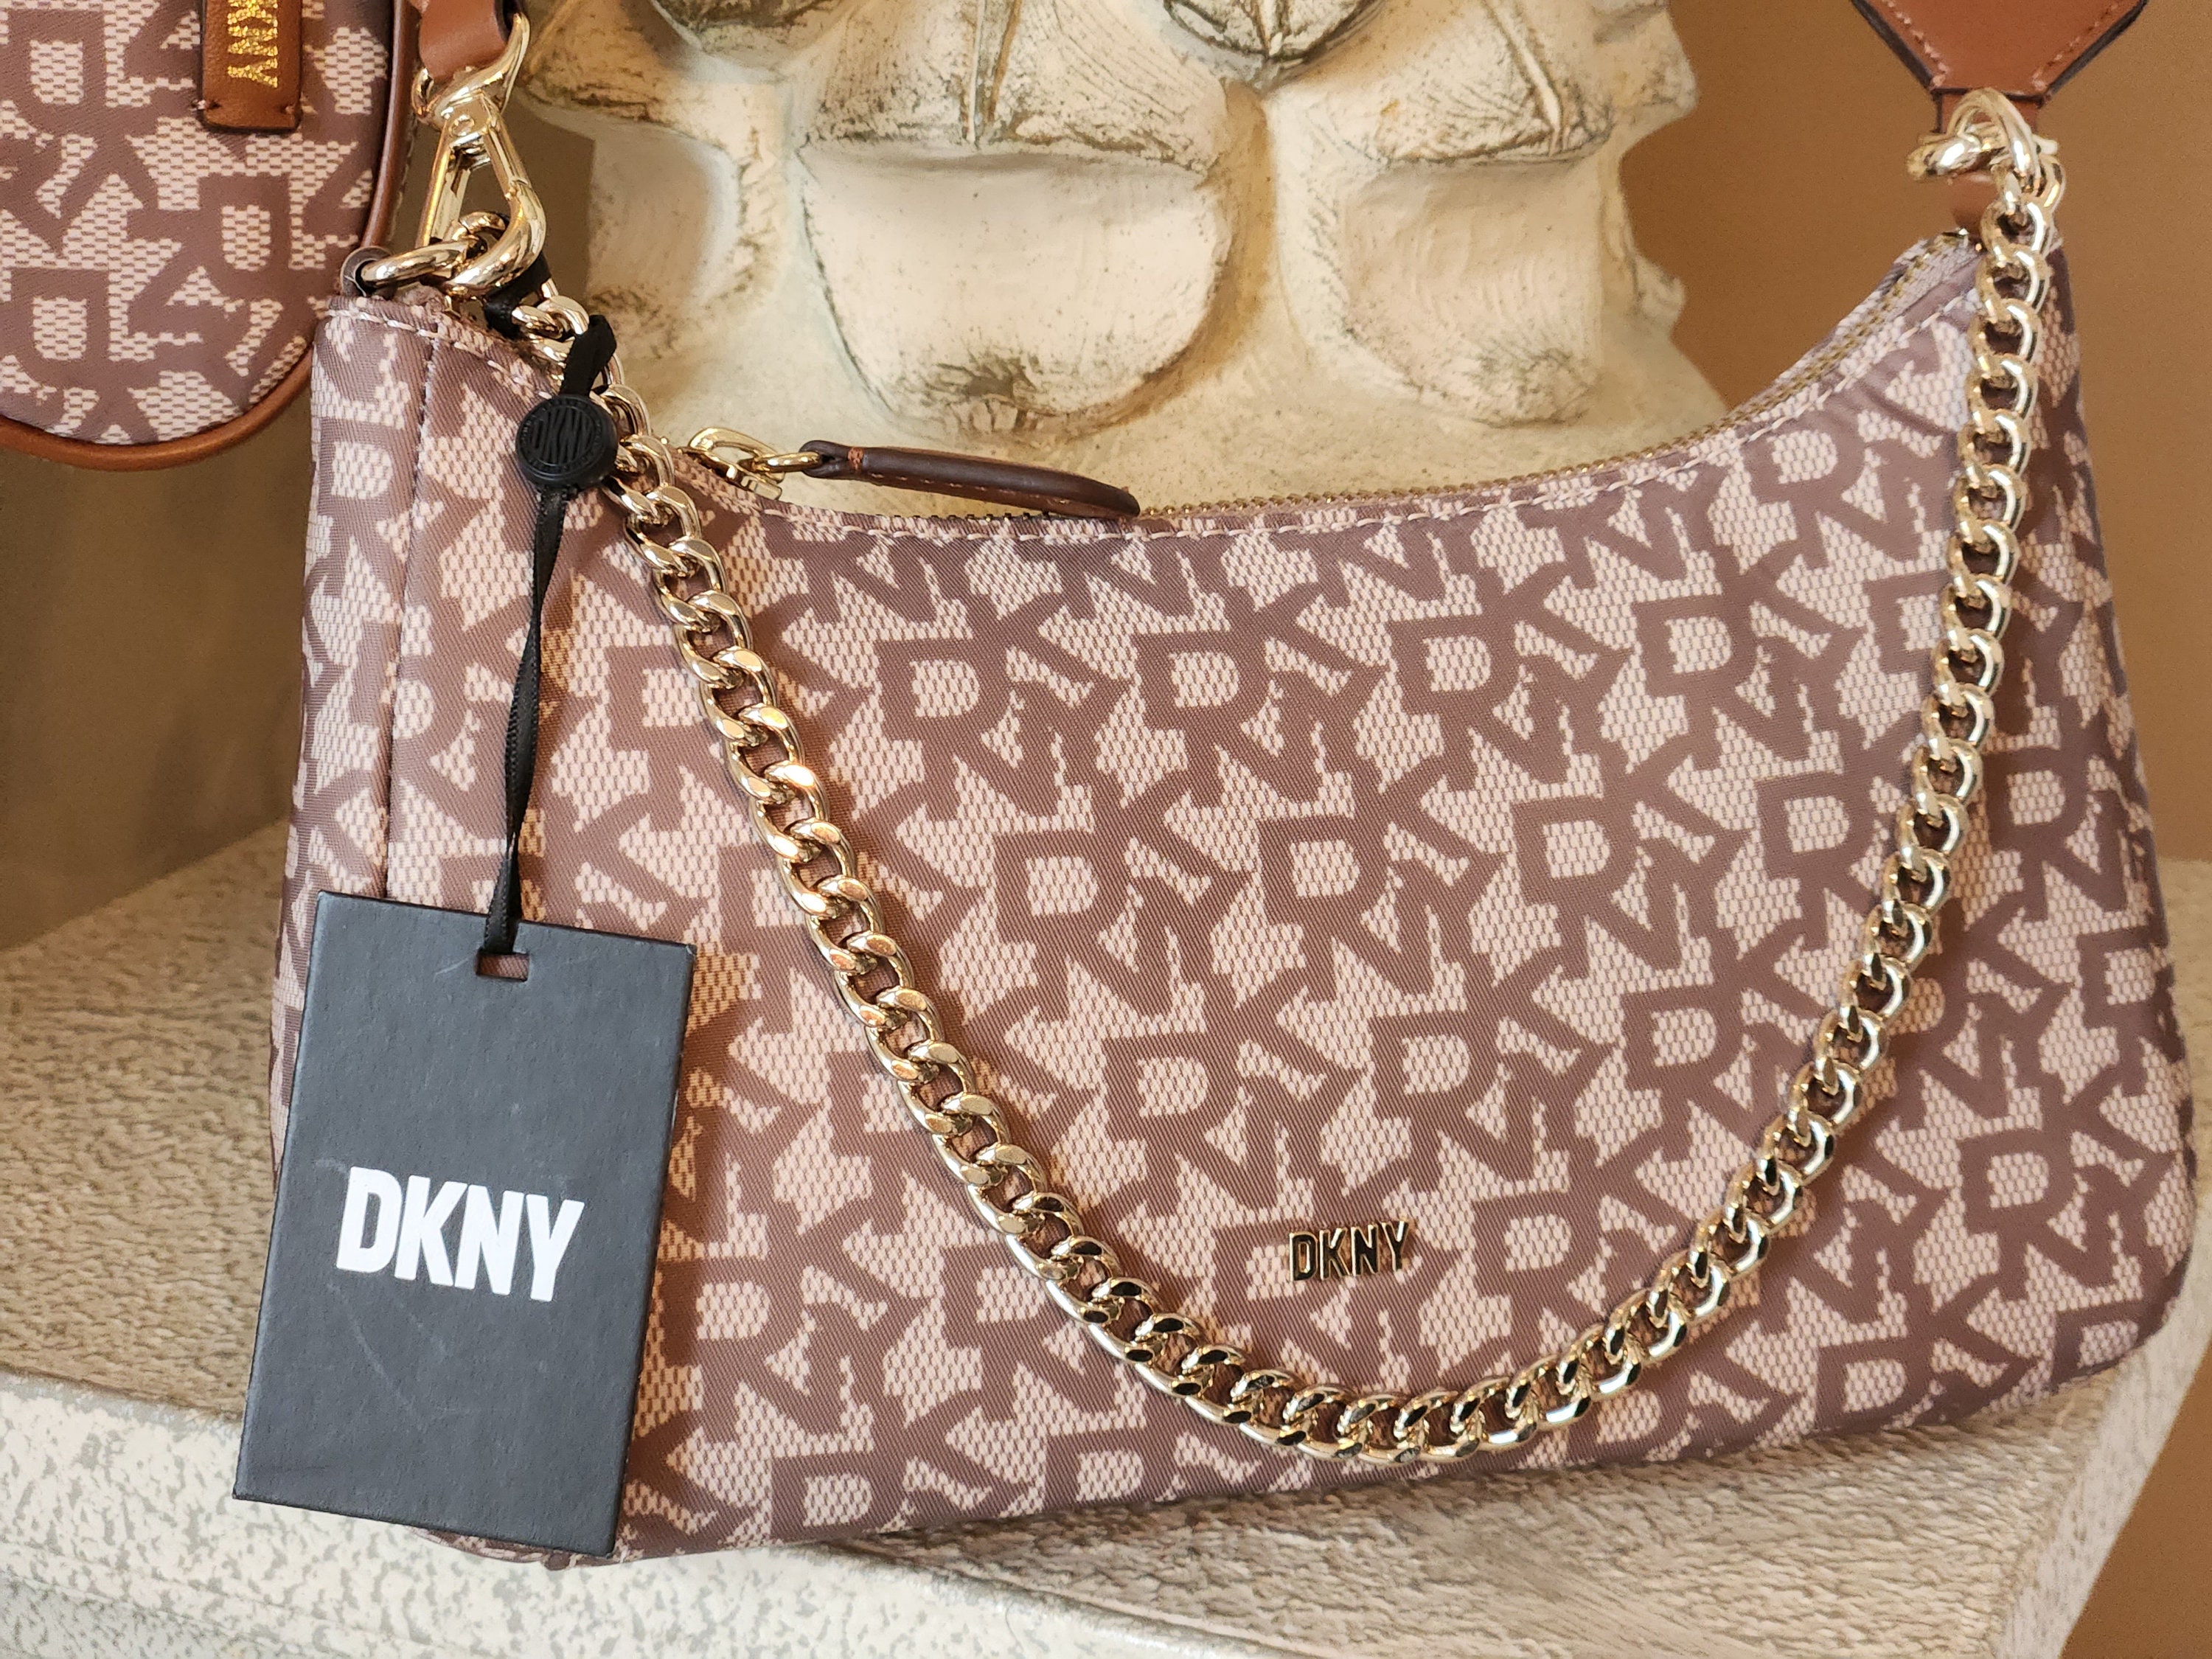 DKNY Signature Logo Handbag Purse Tan Brown Leather Silver Buckles Trim